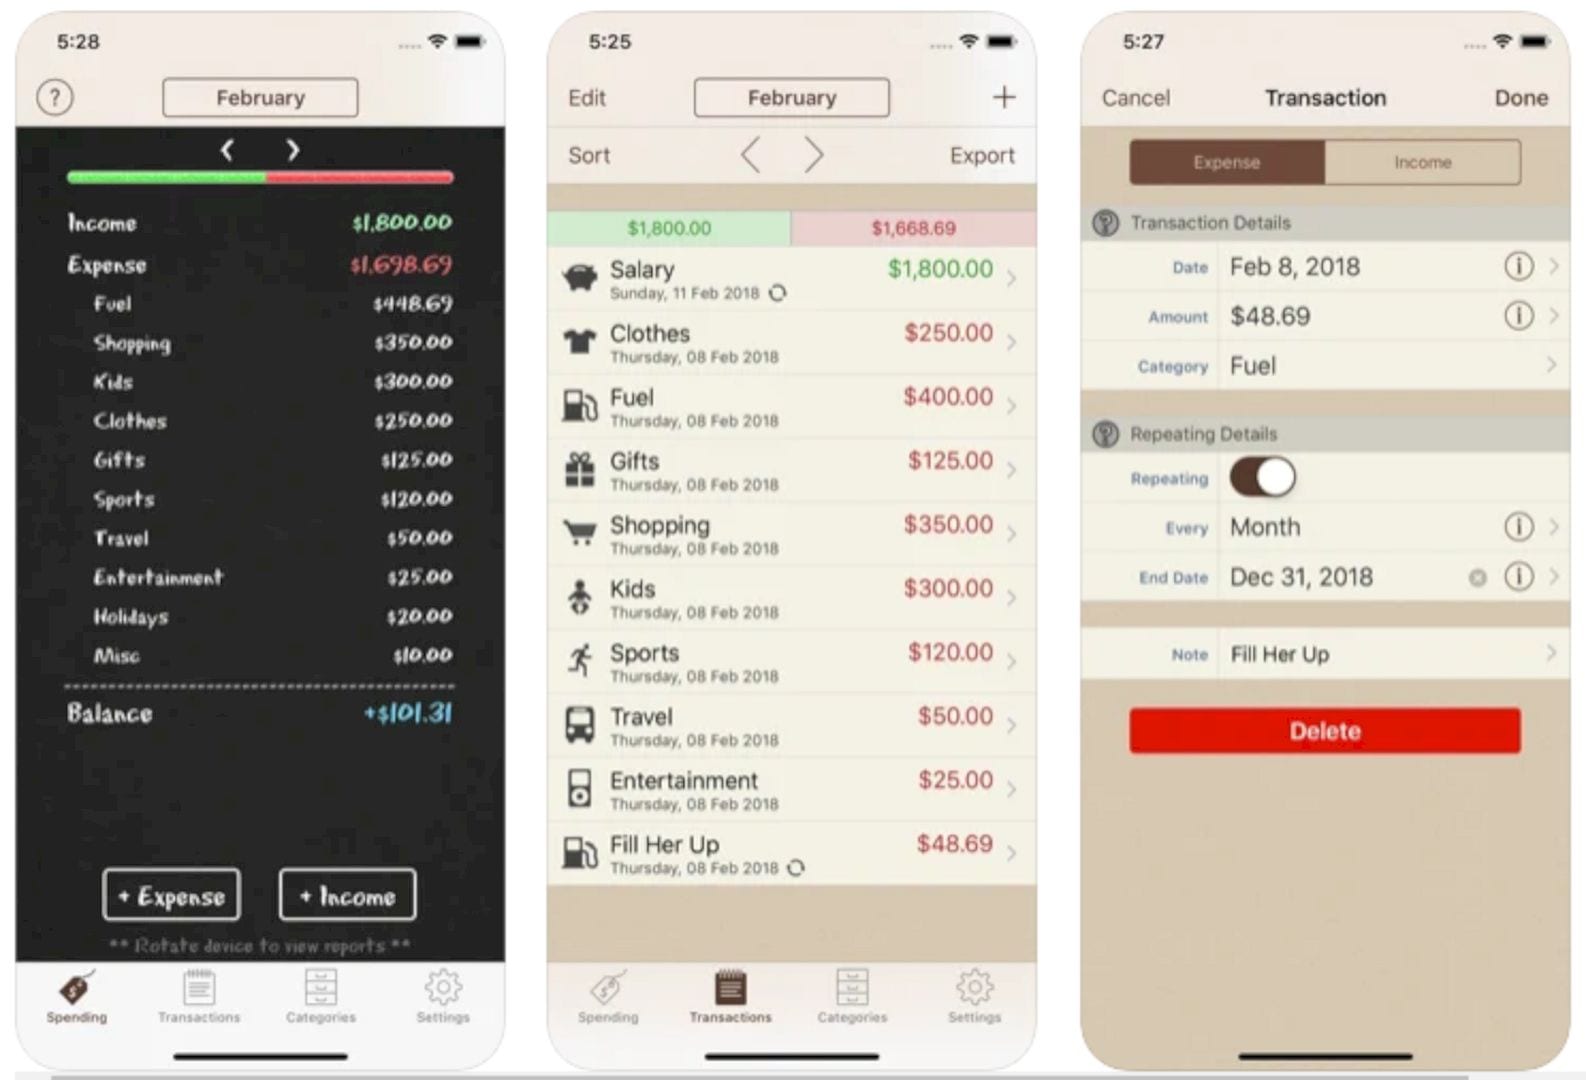 best expense tracker sales iphone app